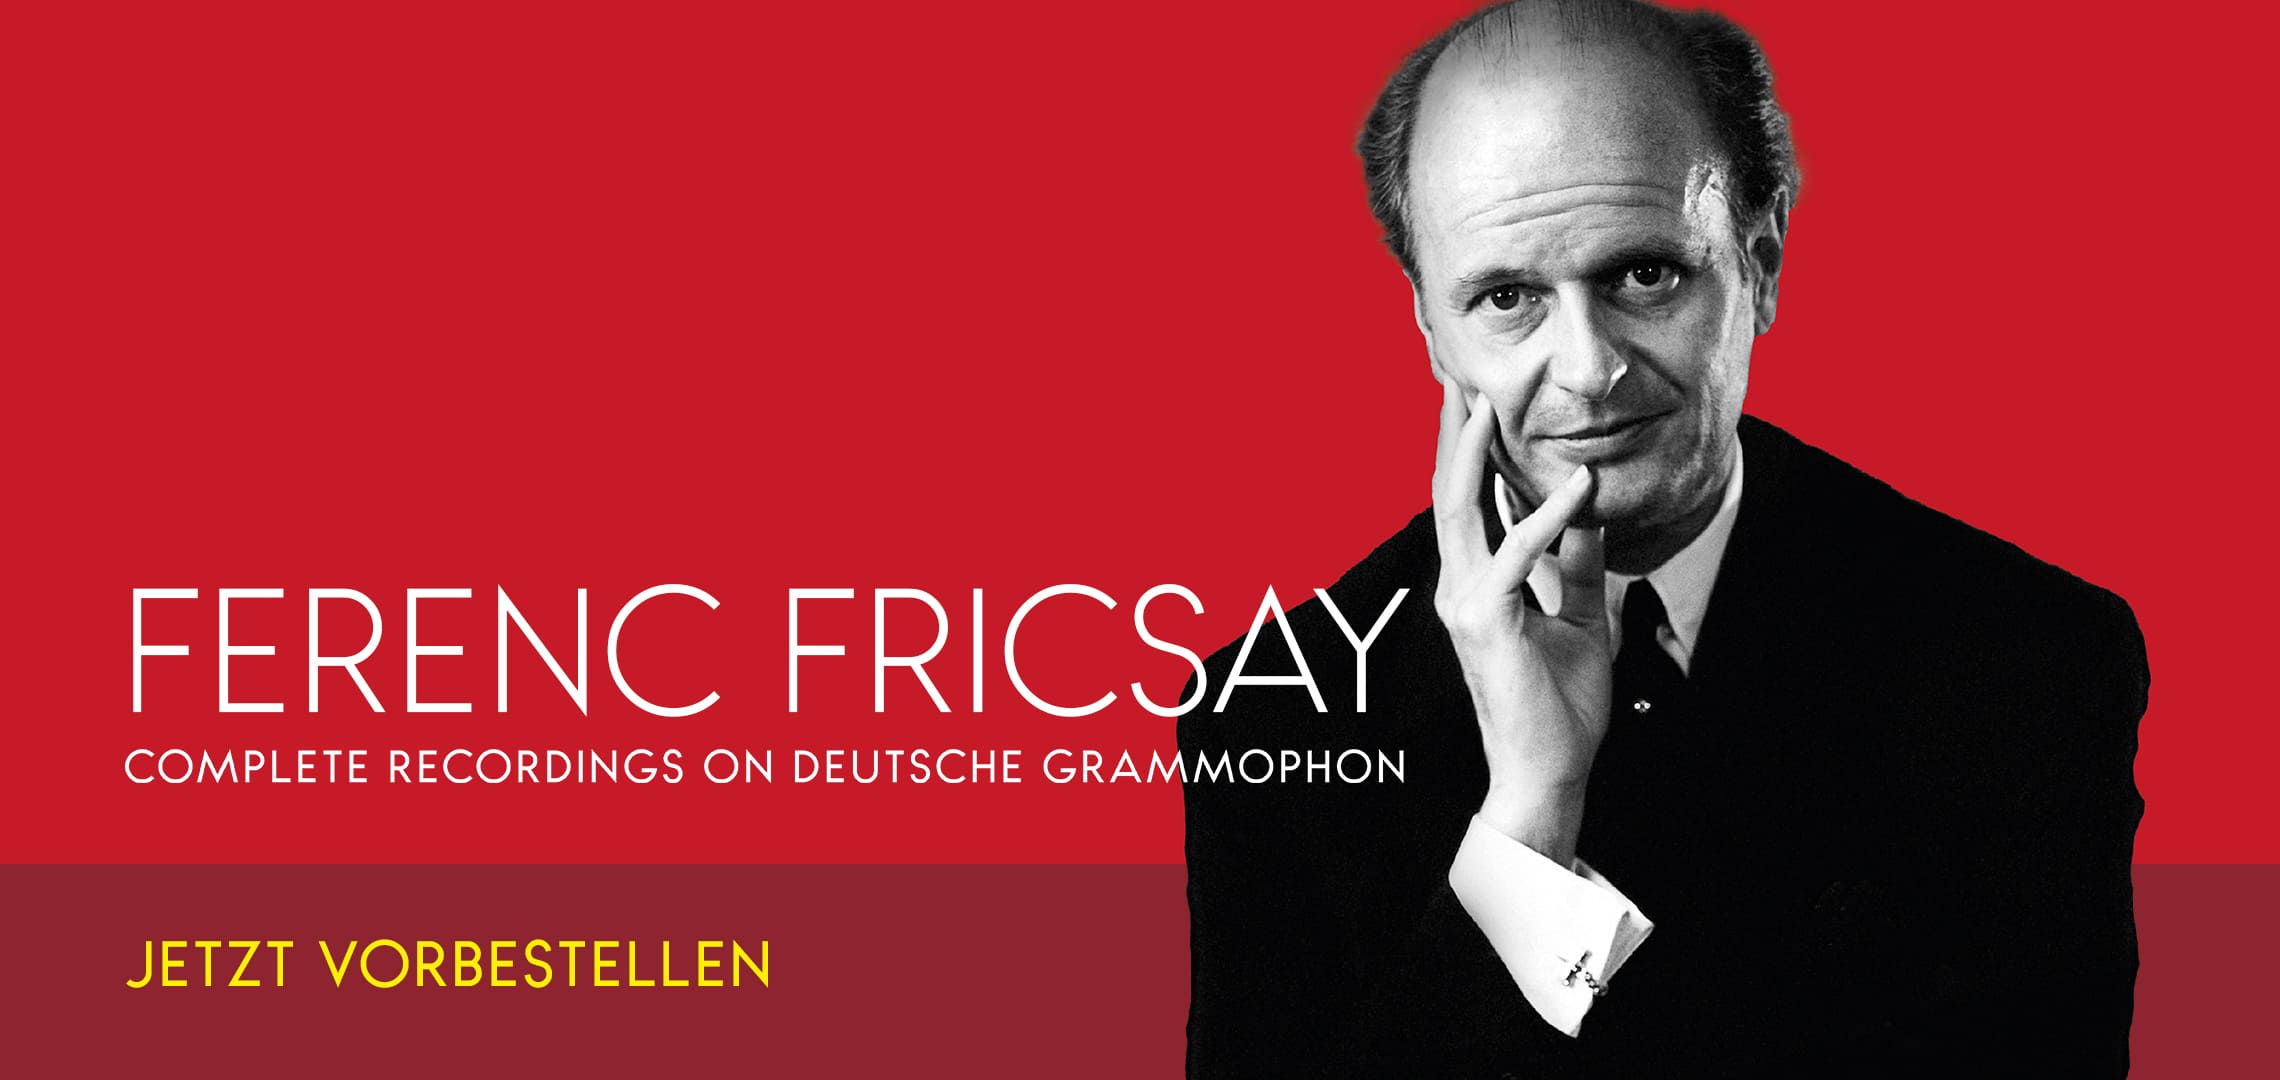 Ferenc Fricsay                                                                                                                  